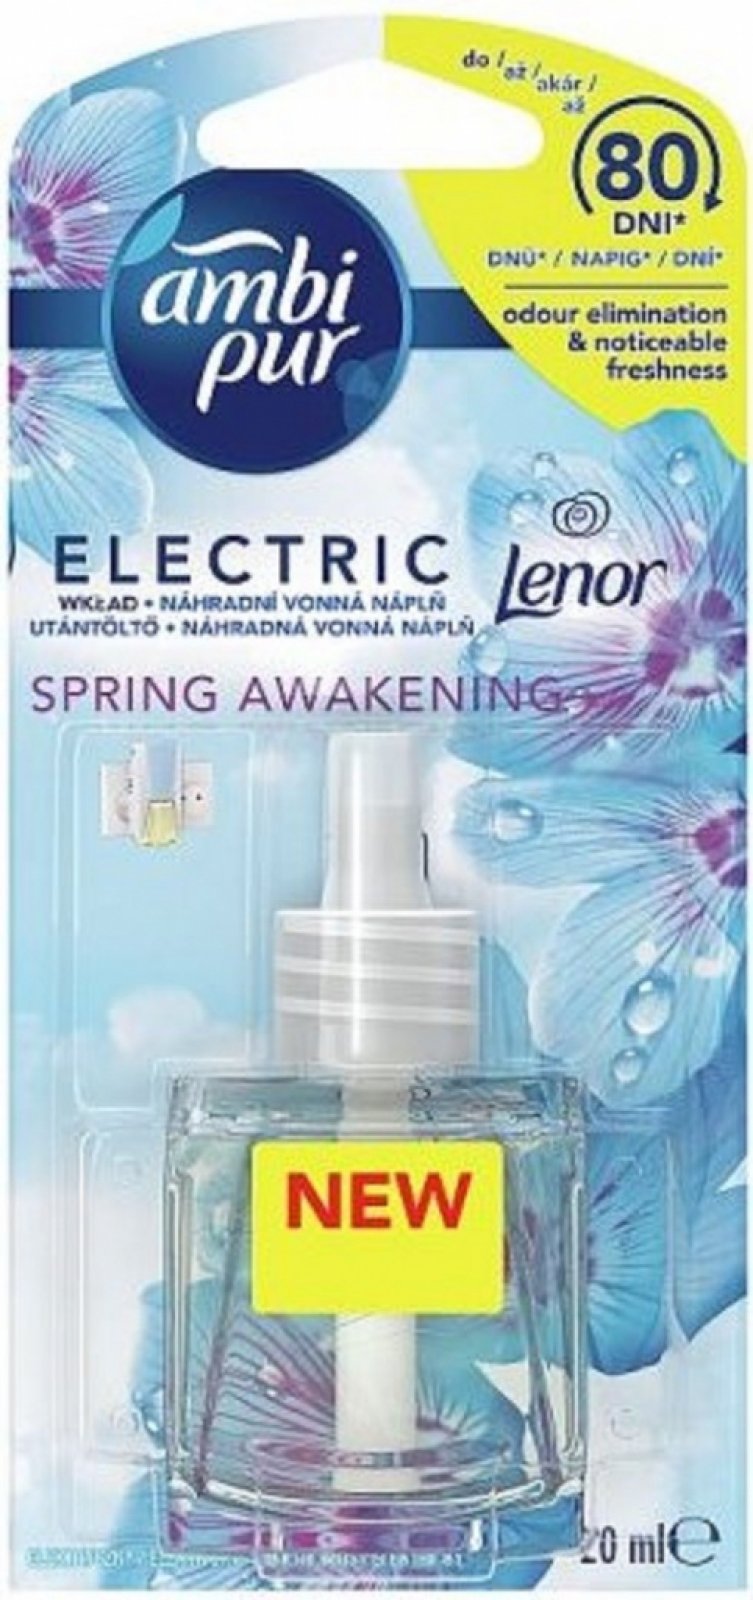 AmbiPur Electric náhradní náplň Lenor Spring 20 ml